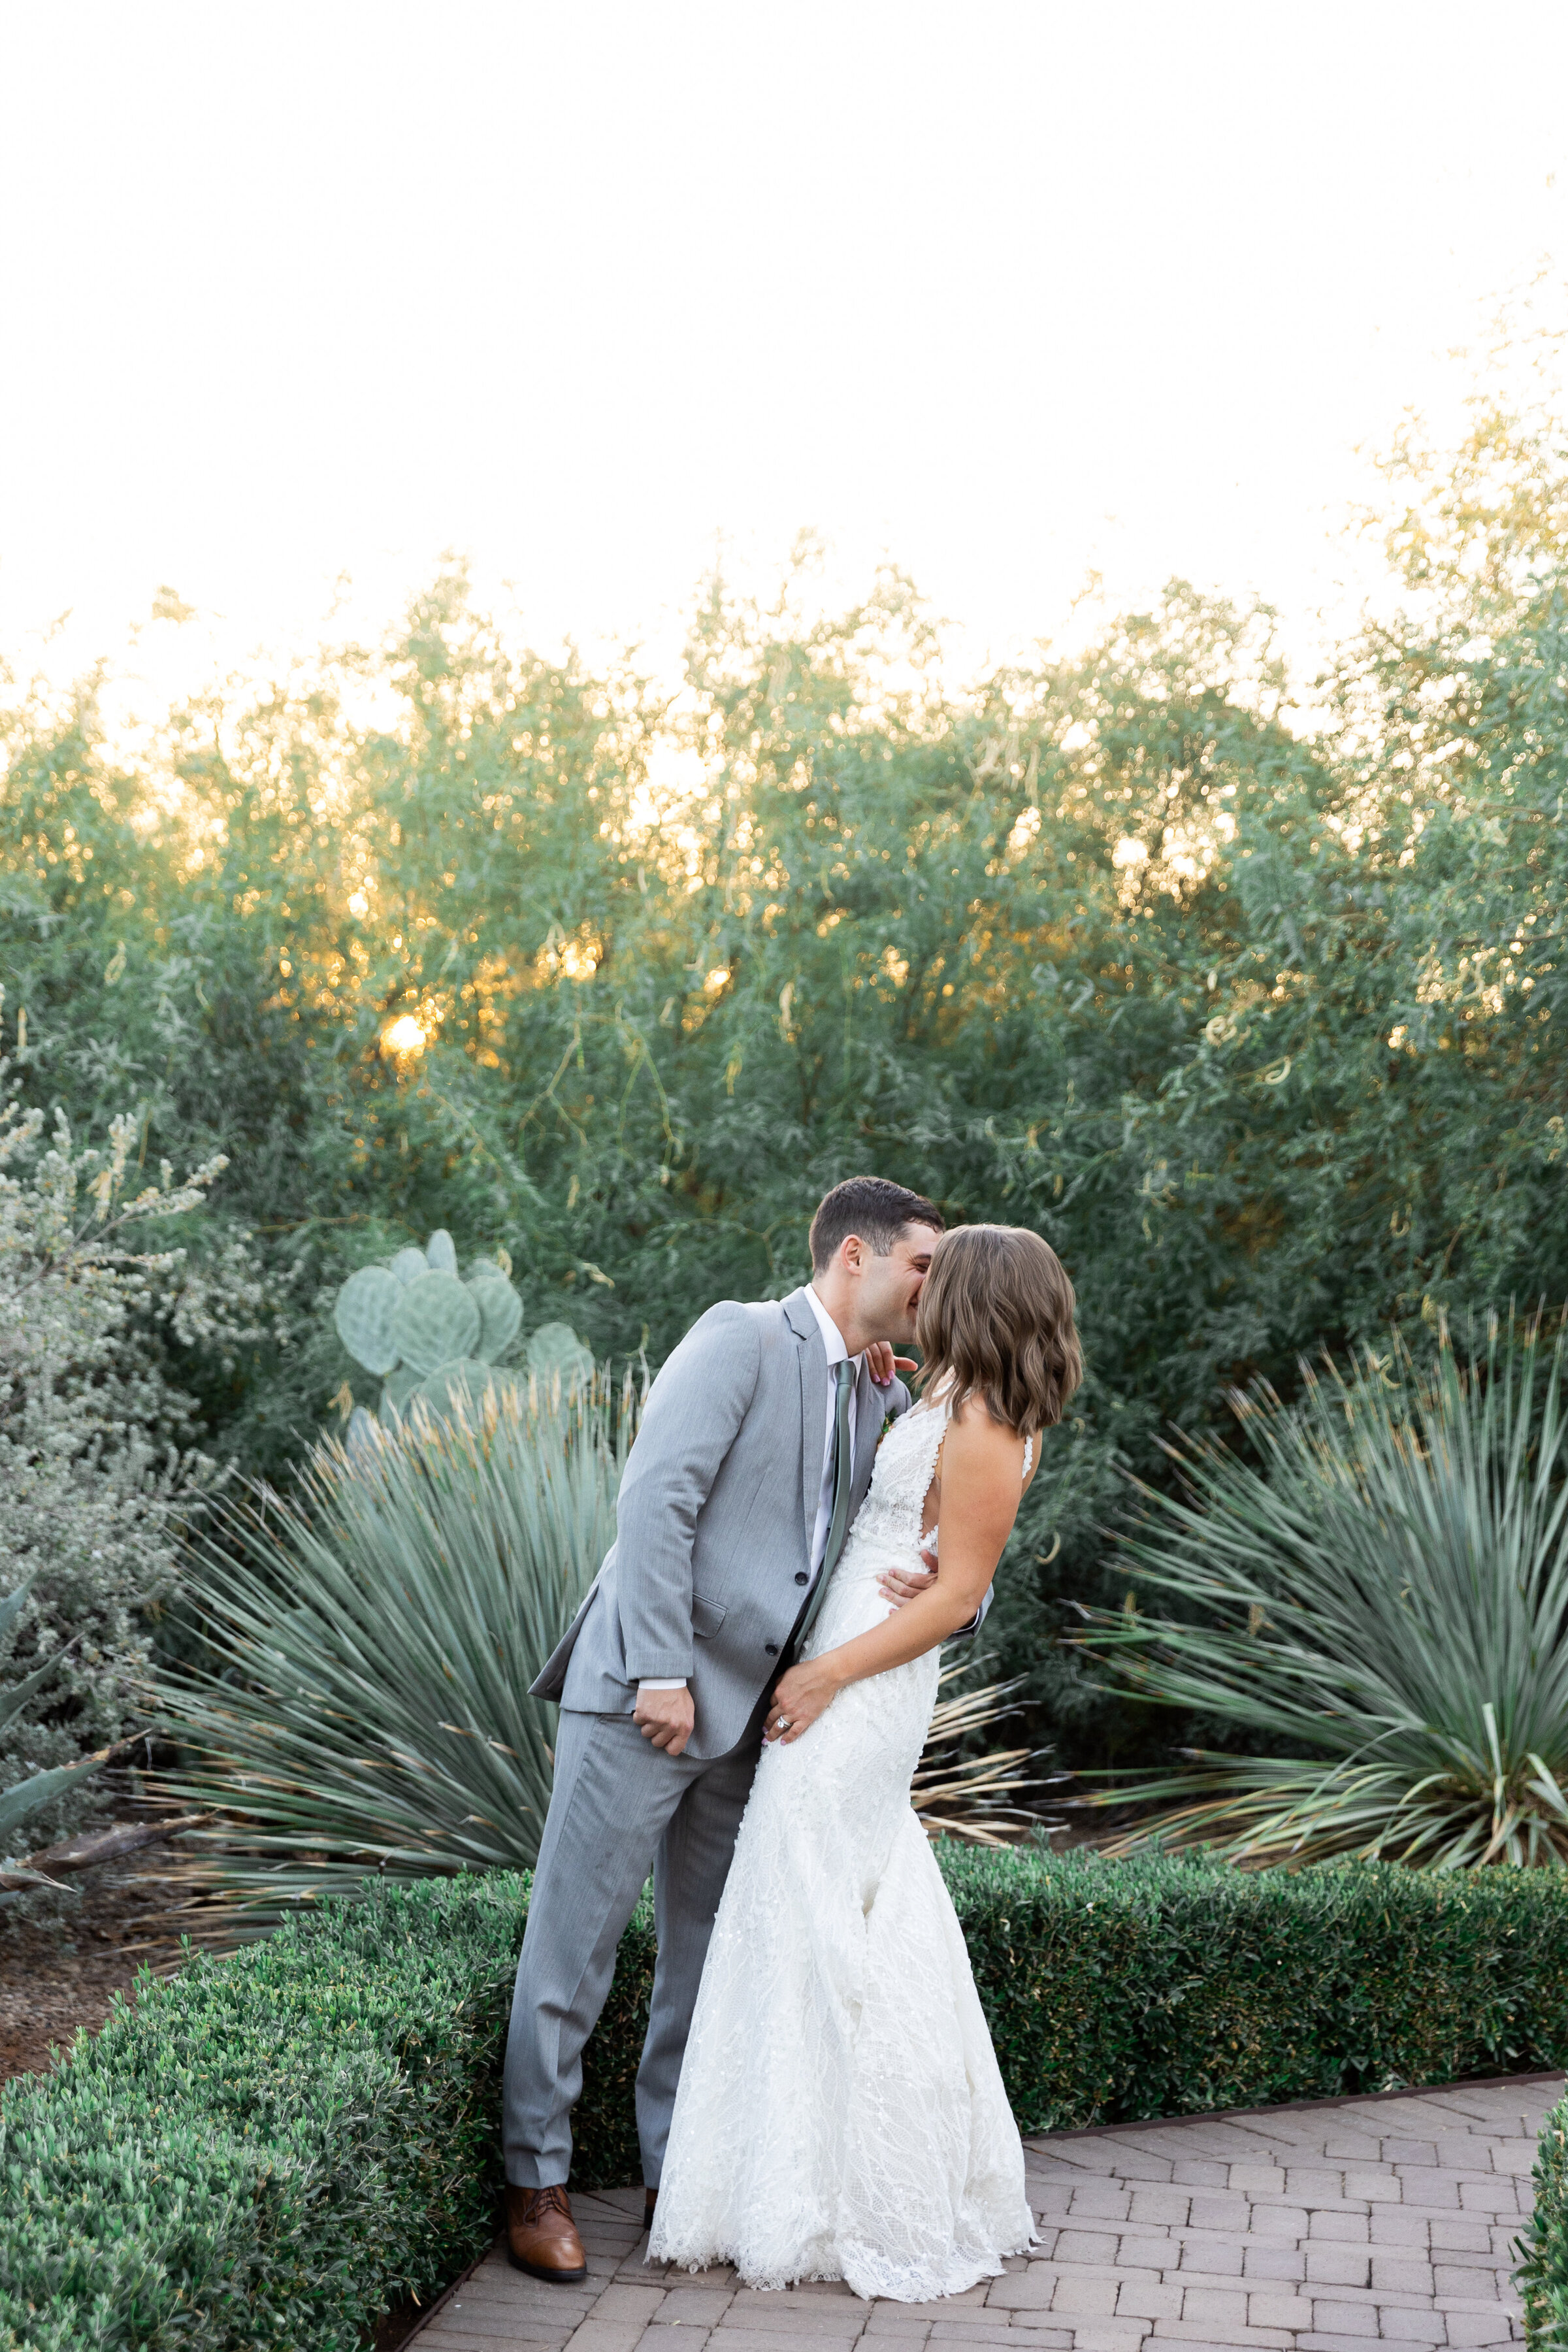 Karlie Colleen Photography - Emily & Mike - Wedding Sneak Peek - El Chorro - Arizona - Revel Wedding Co-315